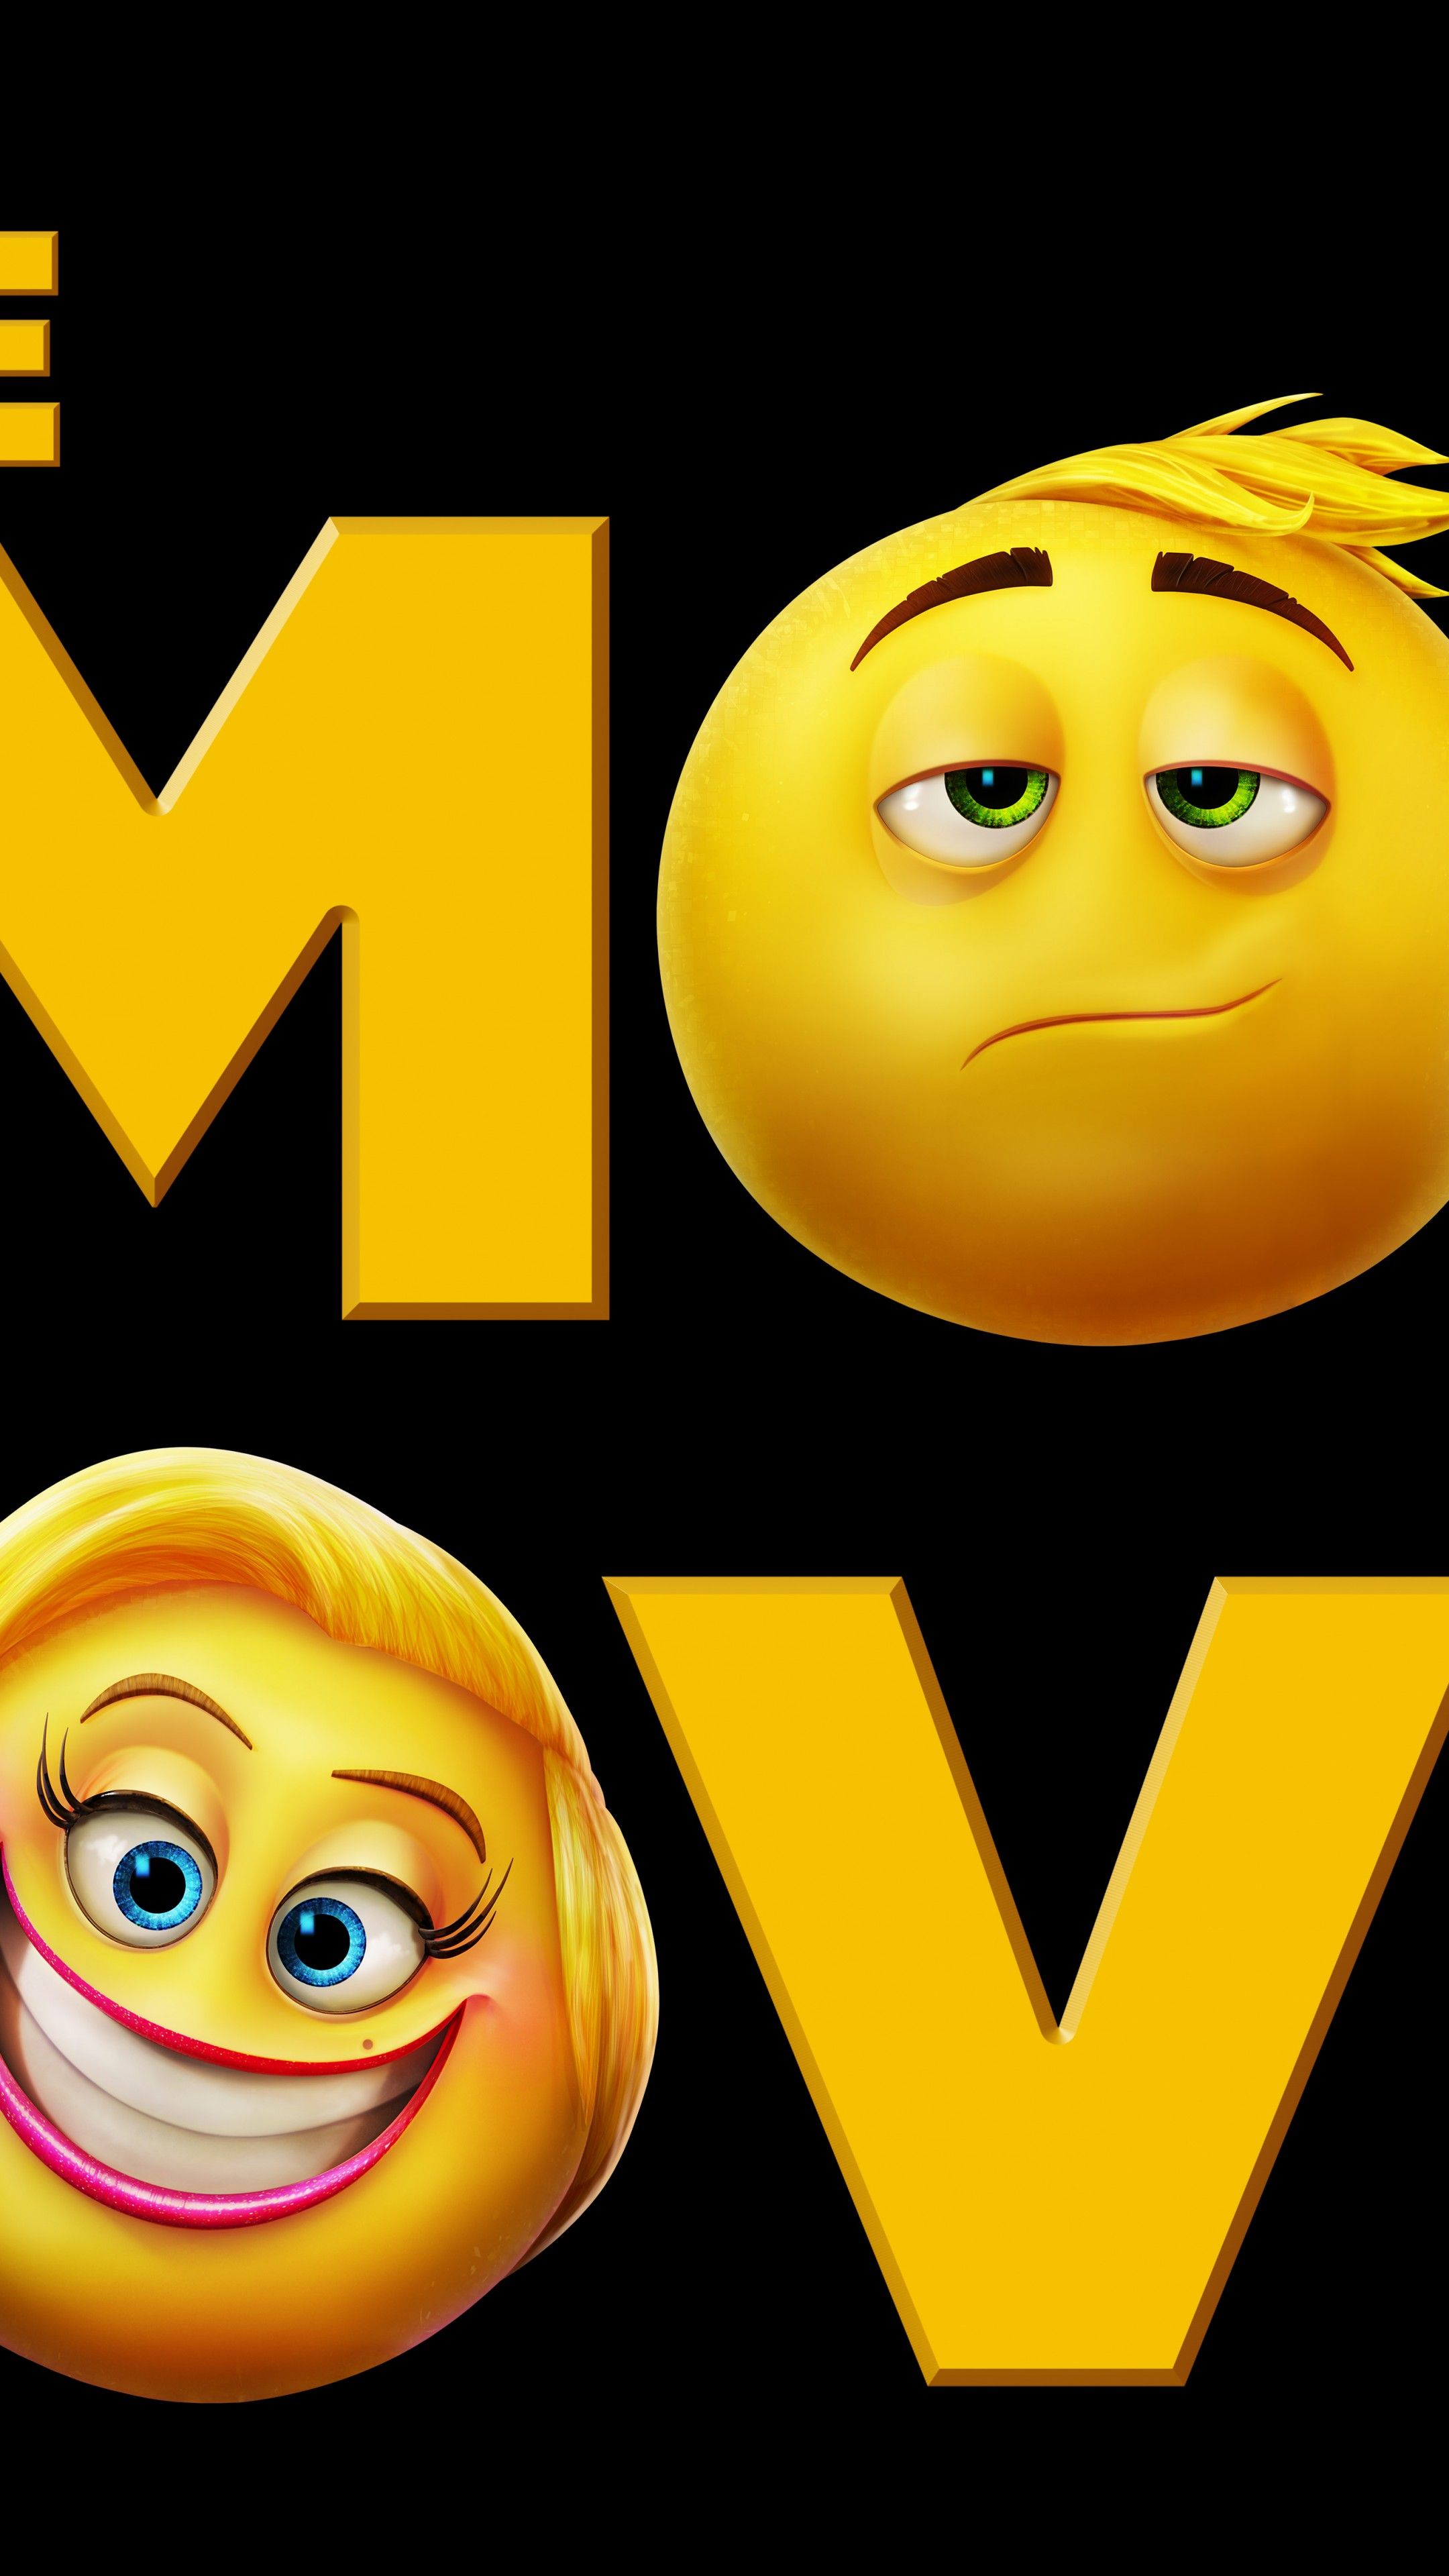 Wallpaper Emojimovie: Express Yourself, smiley, 4k, Movies